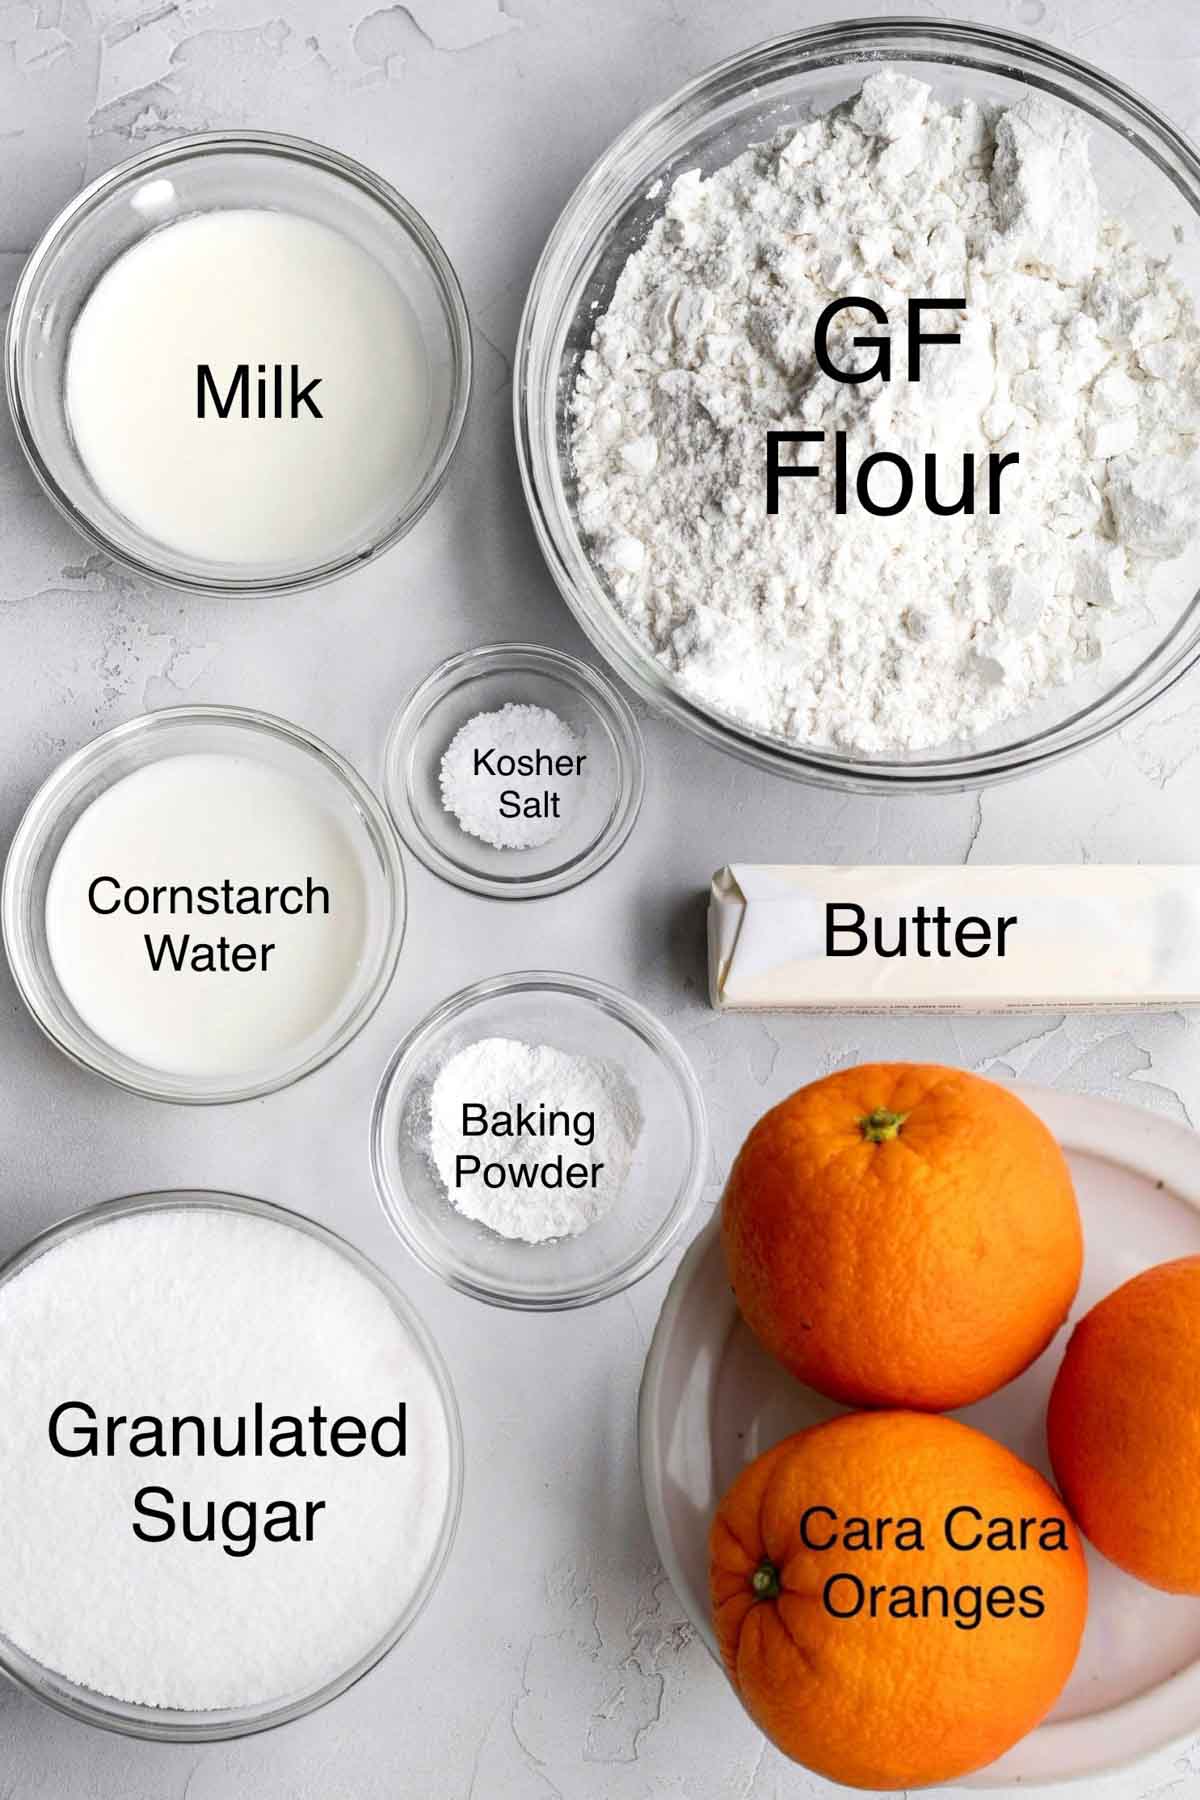 Milk, gluten free flour, cornstarch water, kosher salt, butter, baking powder, granulated sugar and three Cara Cara oranges in separate containers.